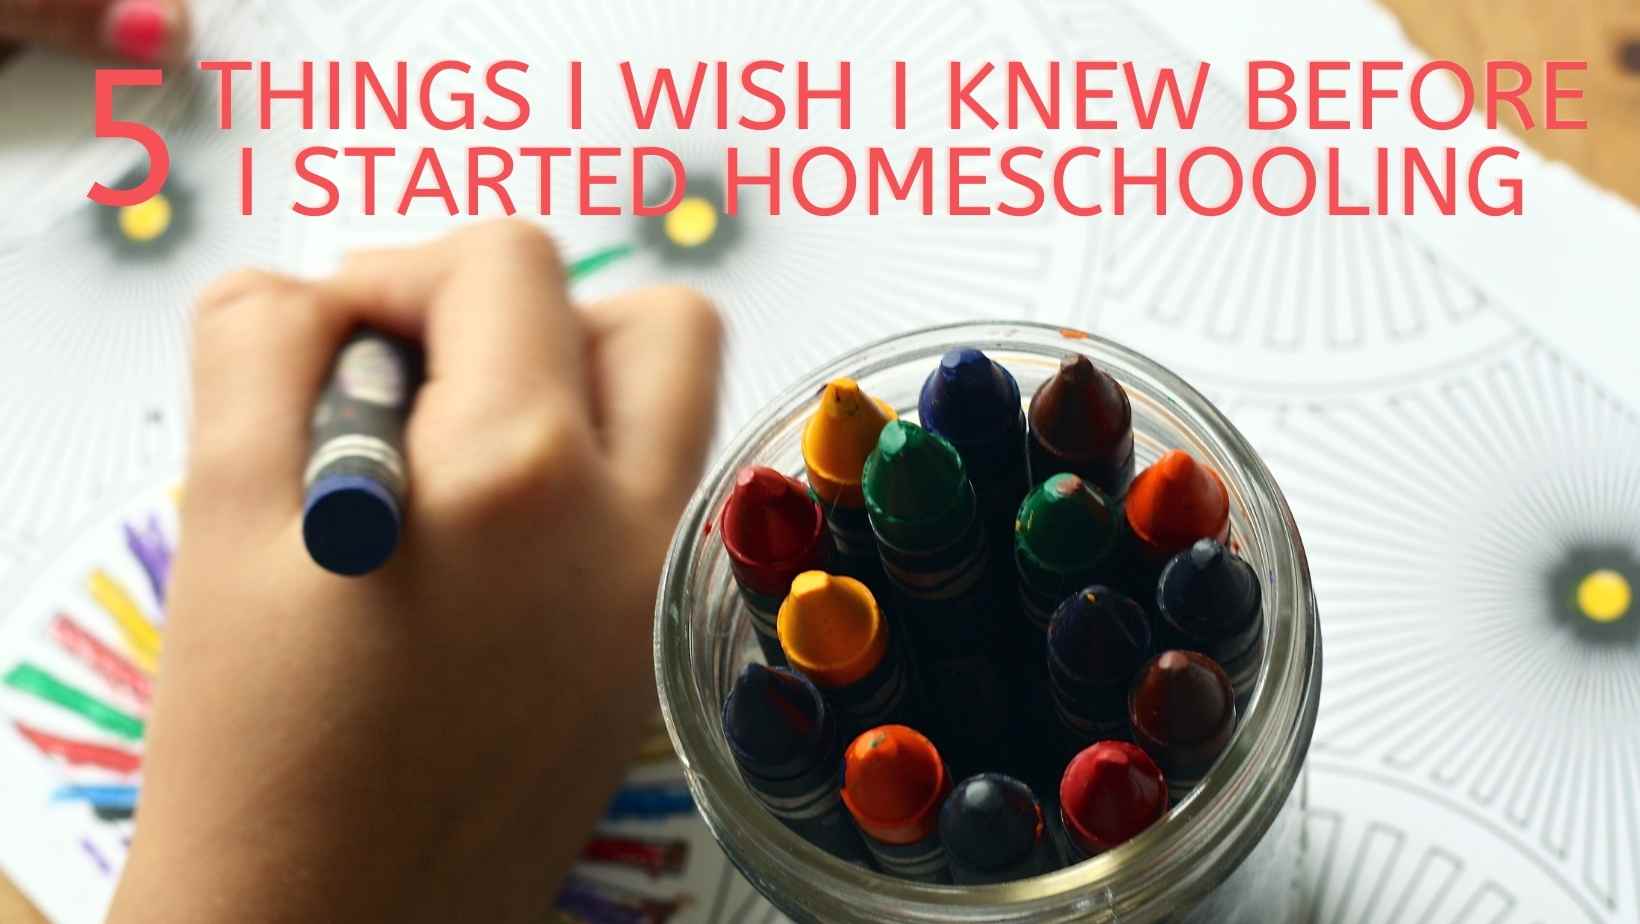 5 Things I wish I knew before I started homeschooling